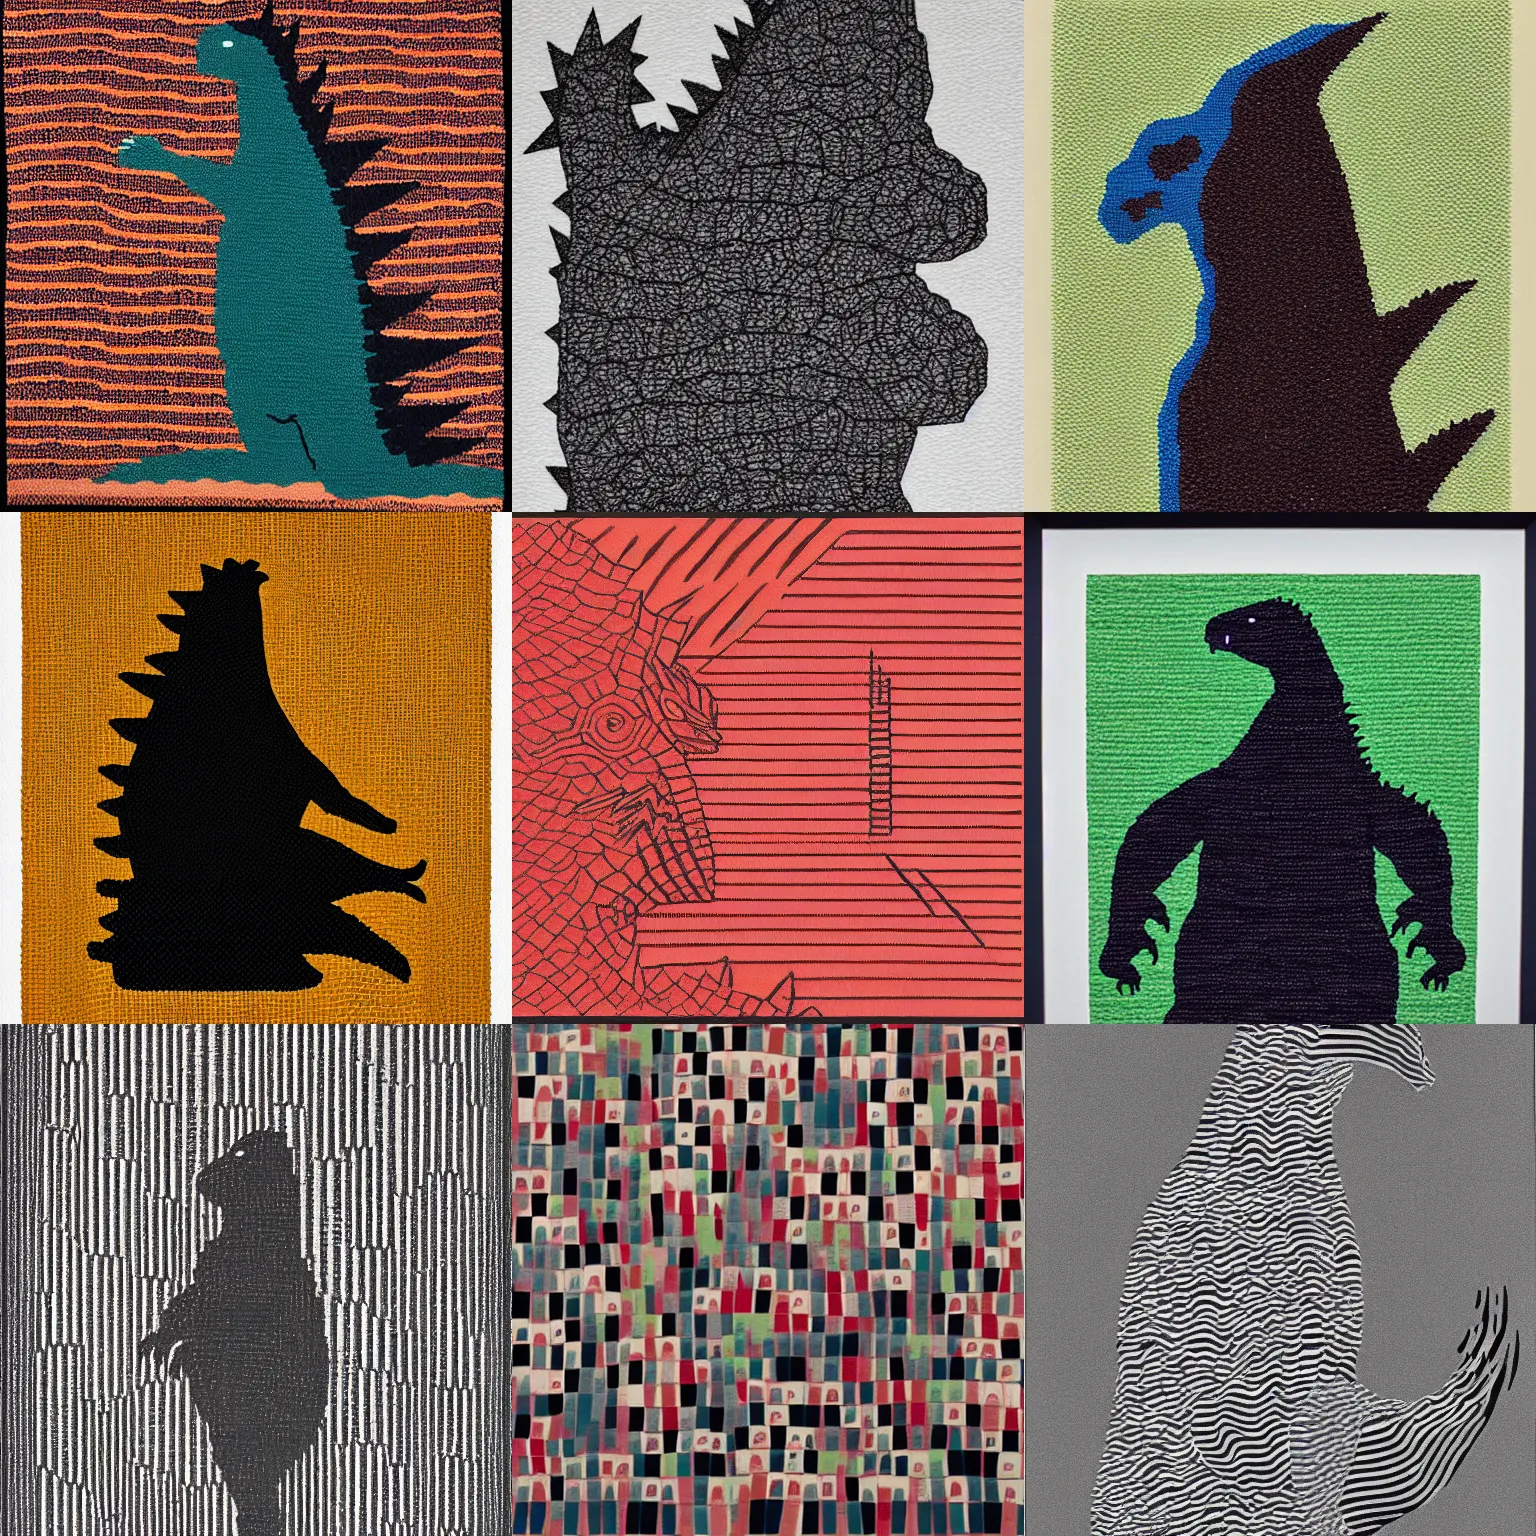 Prompt: Godzilla, artwork by Anni ALbers